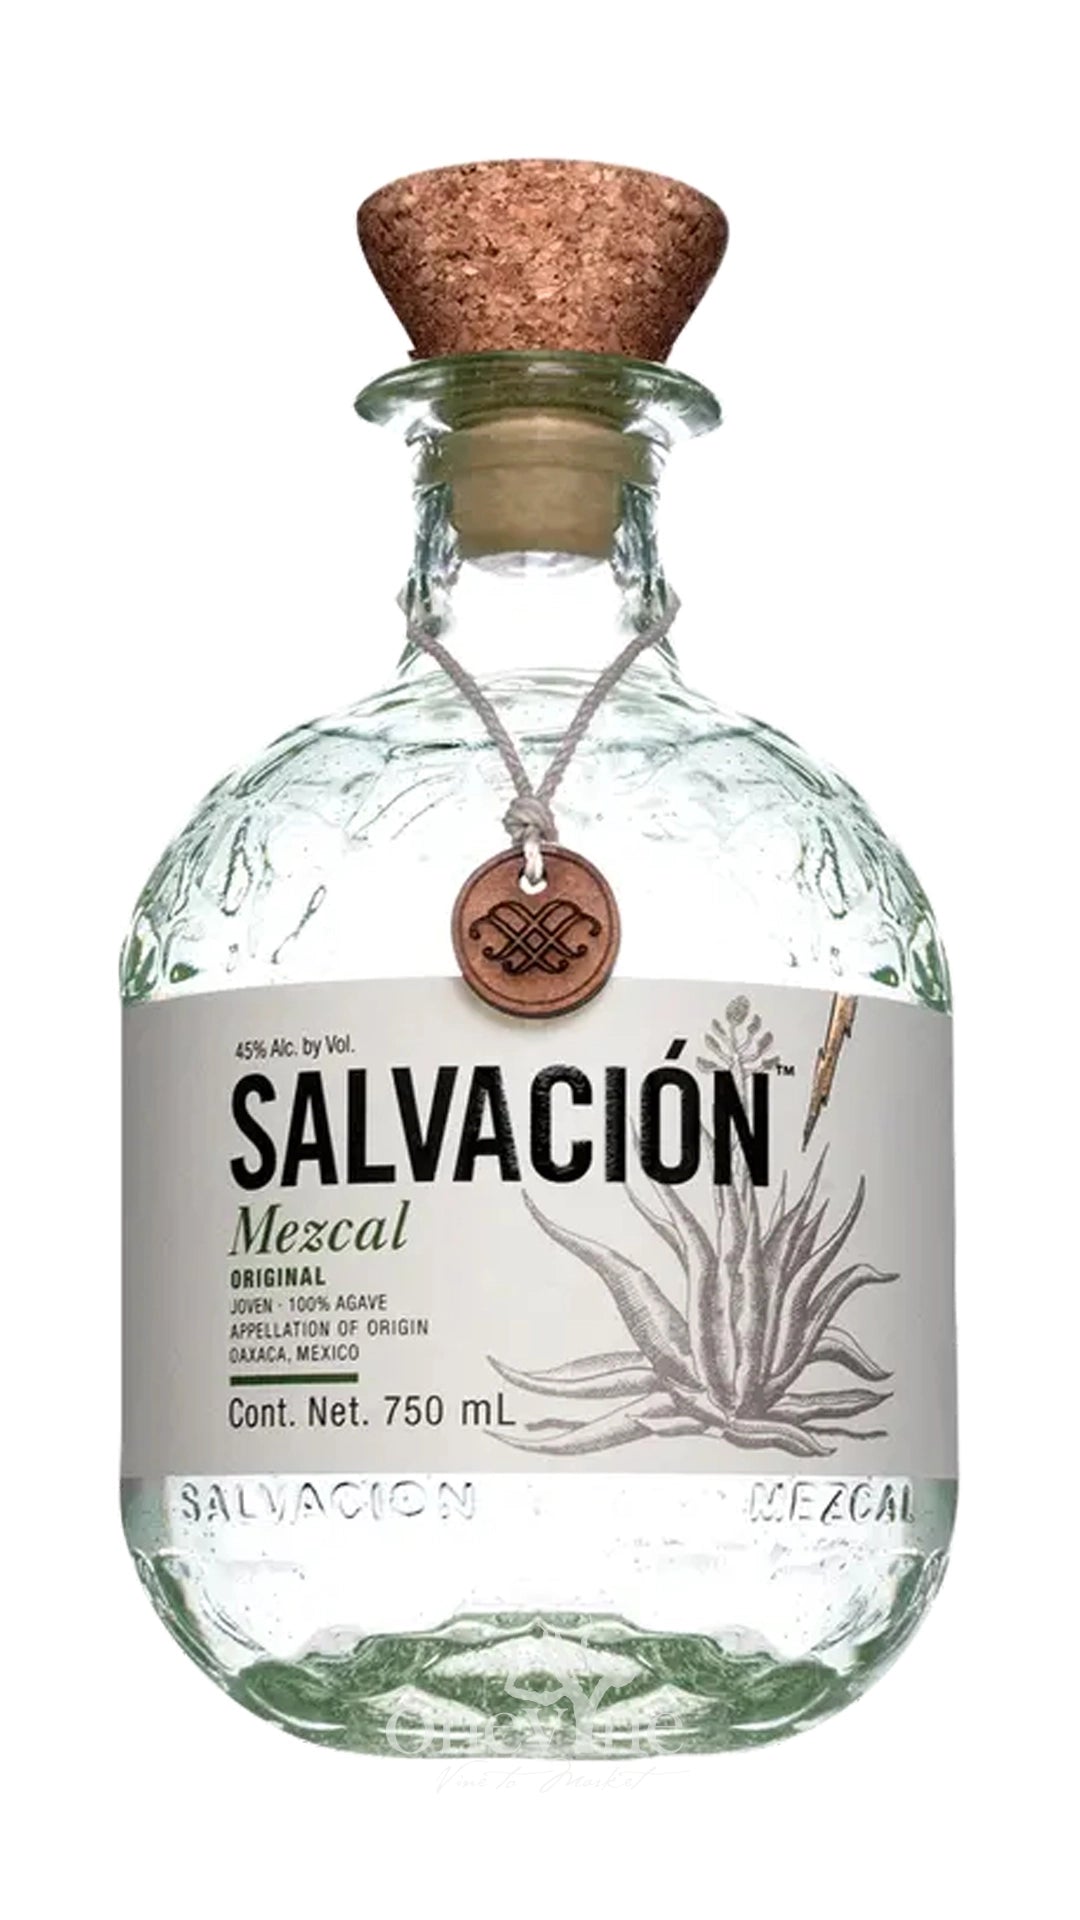 Salvacion Original Mezcal Mexico